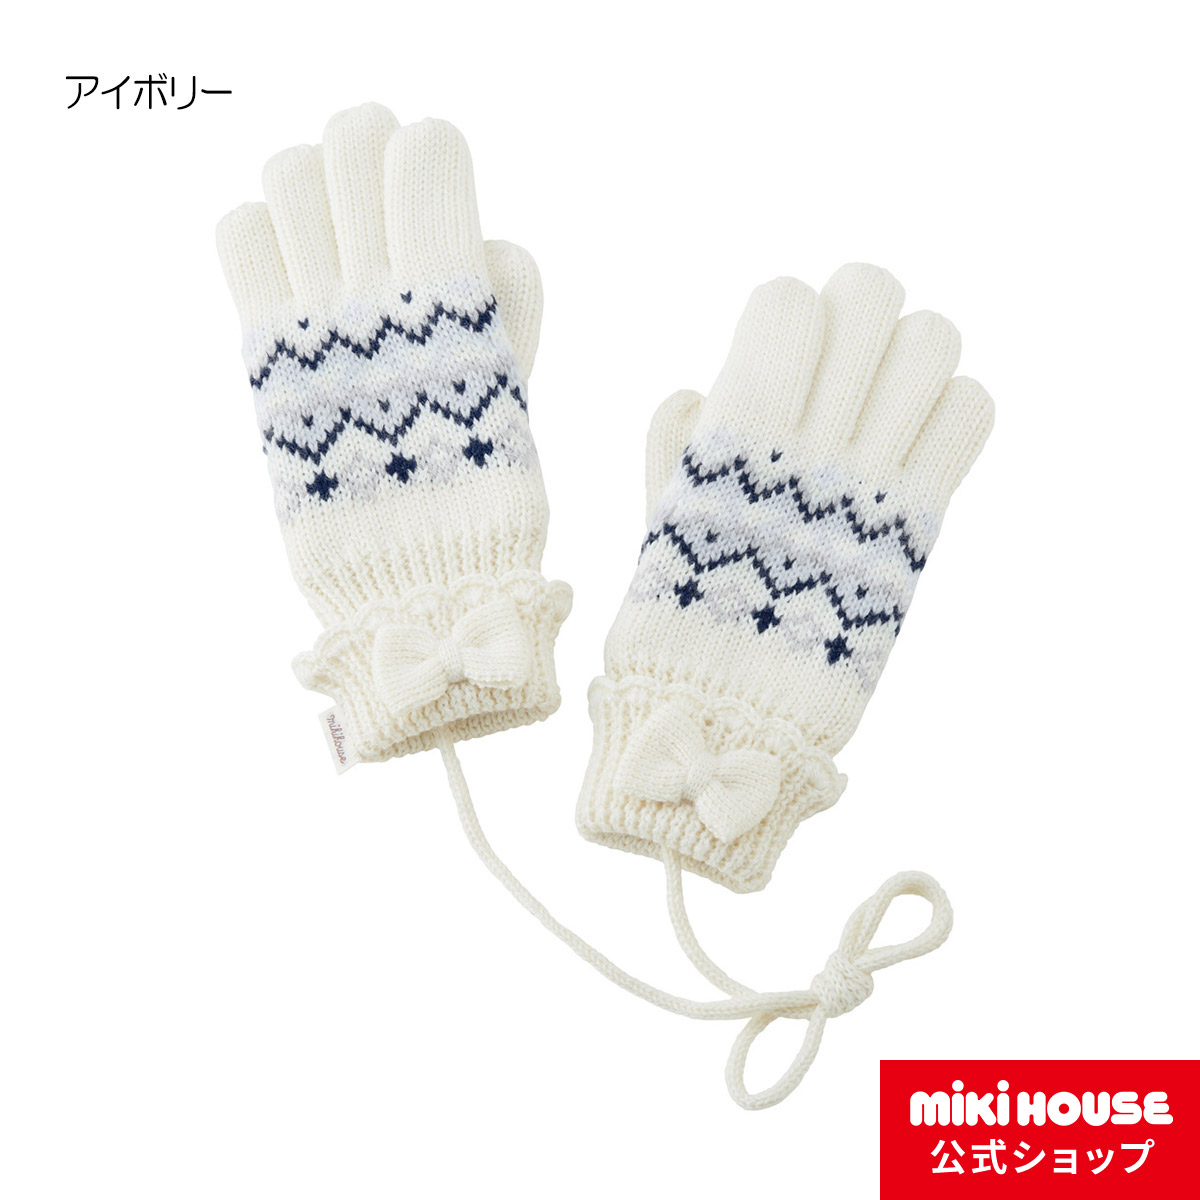 mikihouse 手袋 - 手袋